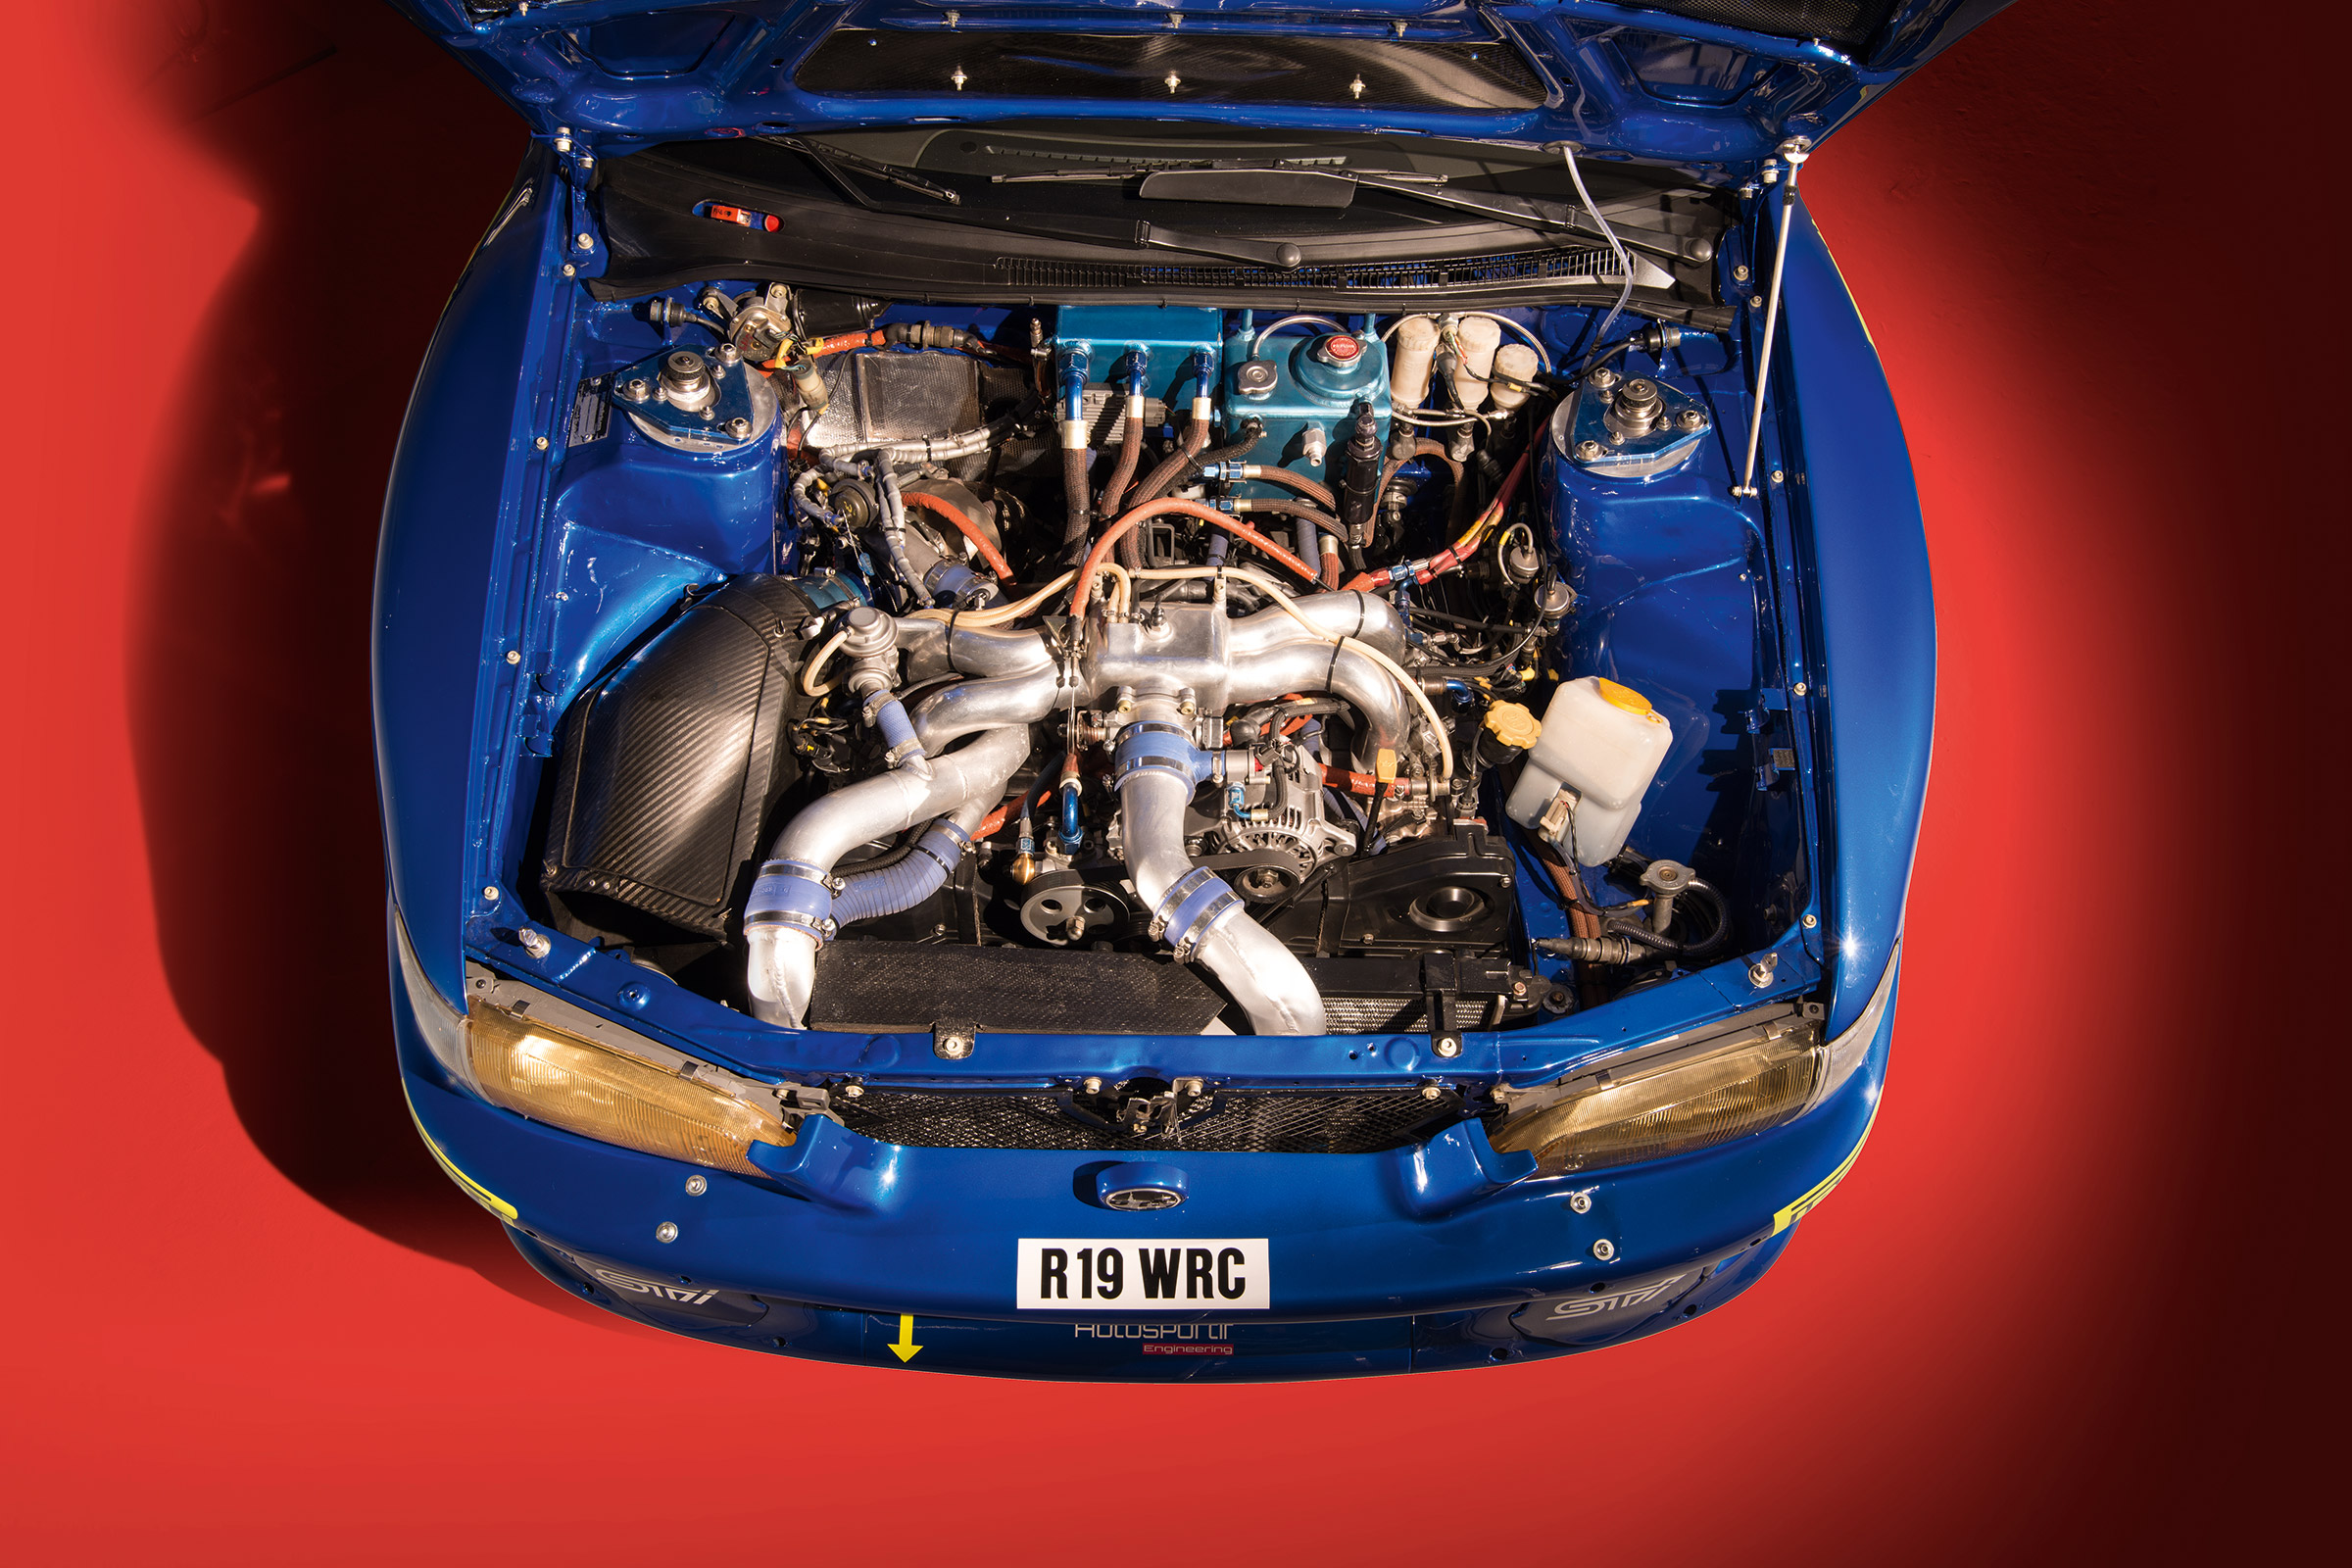 Wrc Subaru Engine - anonimamentemivida